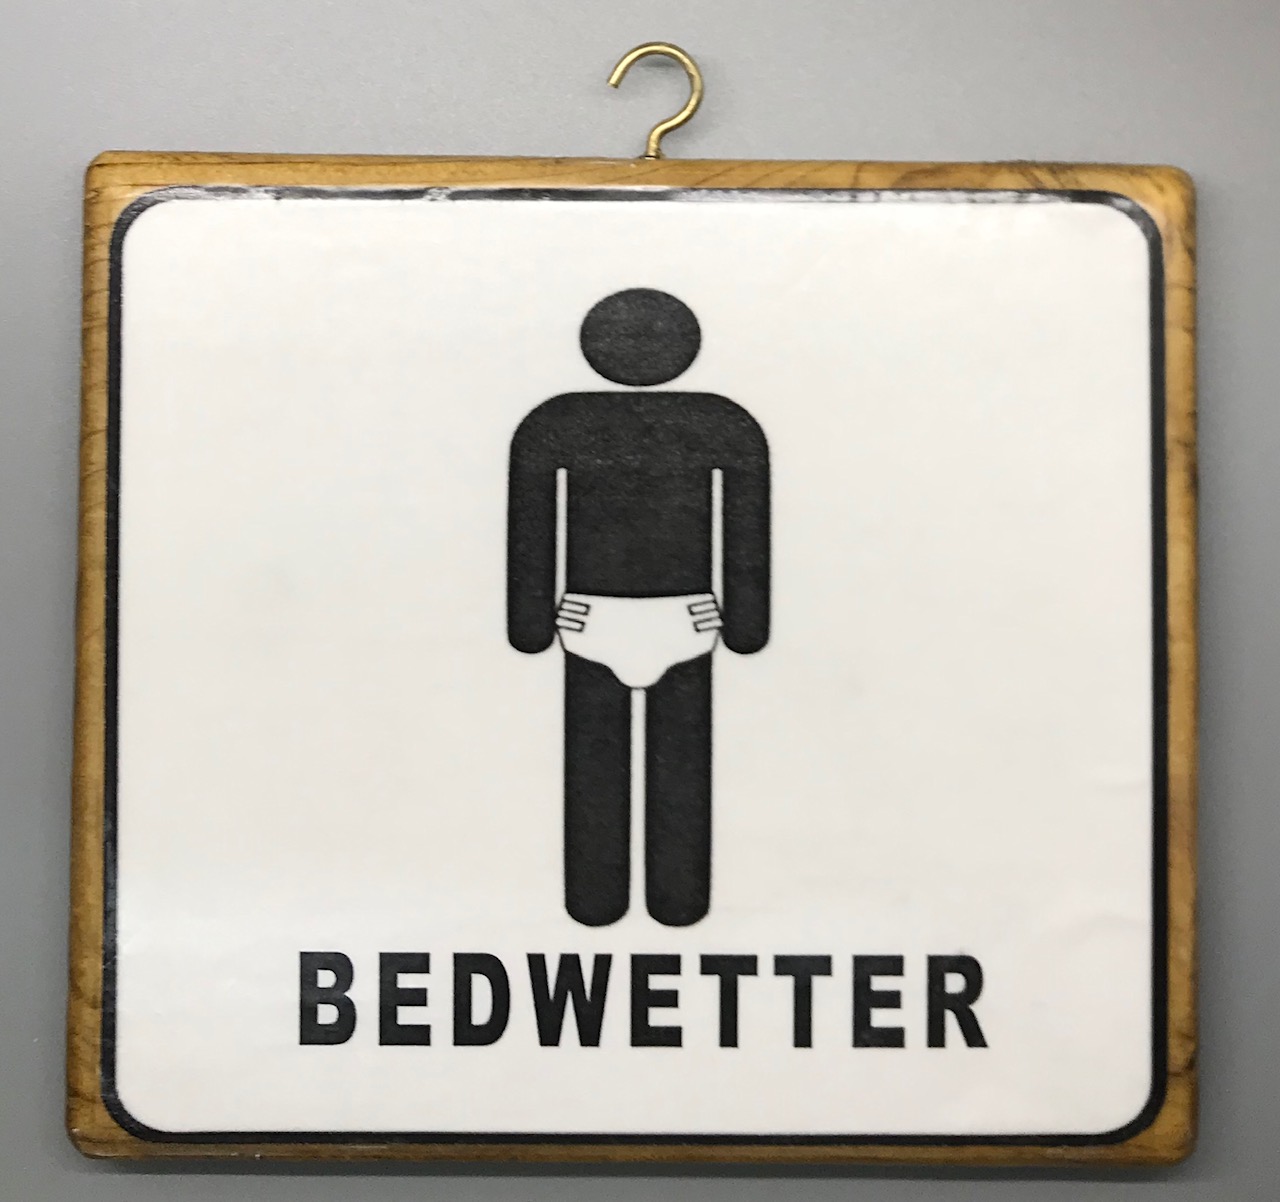 Bedwetter sign - Boy version